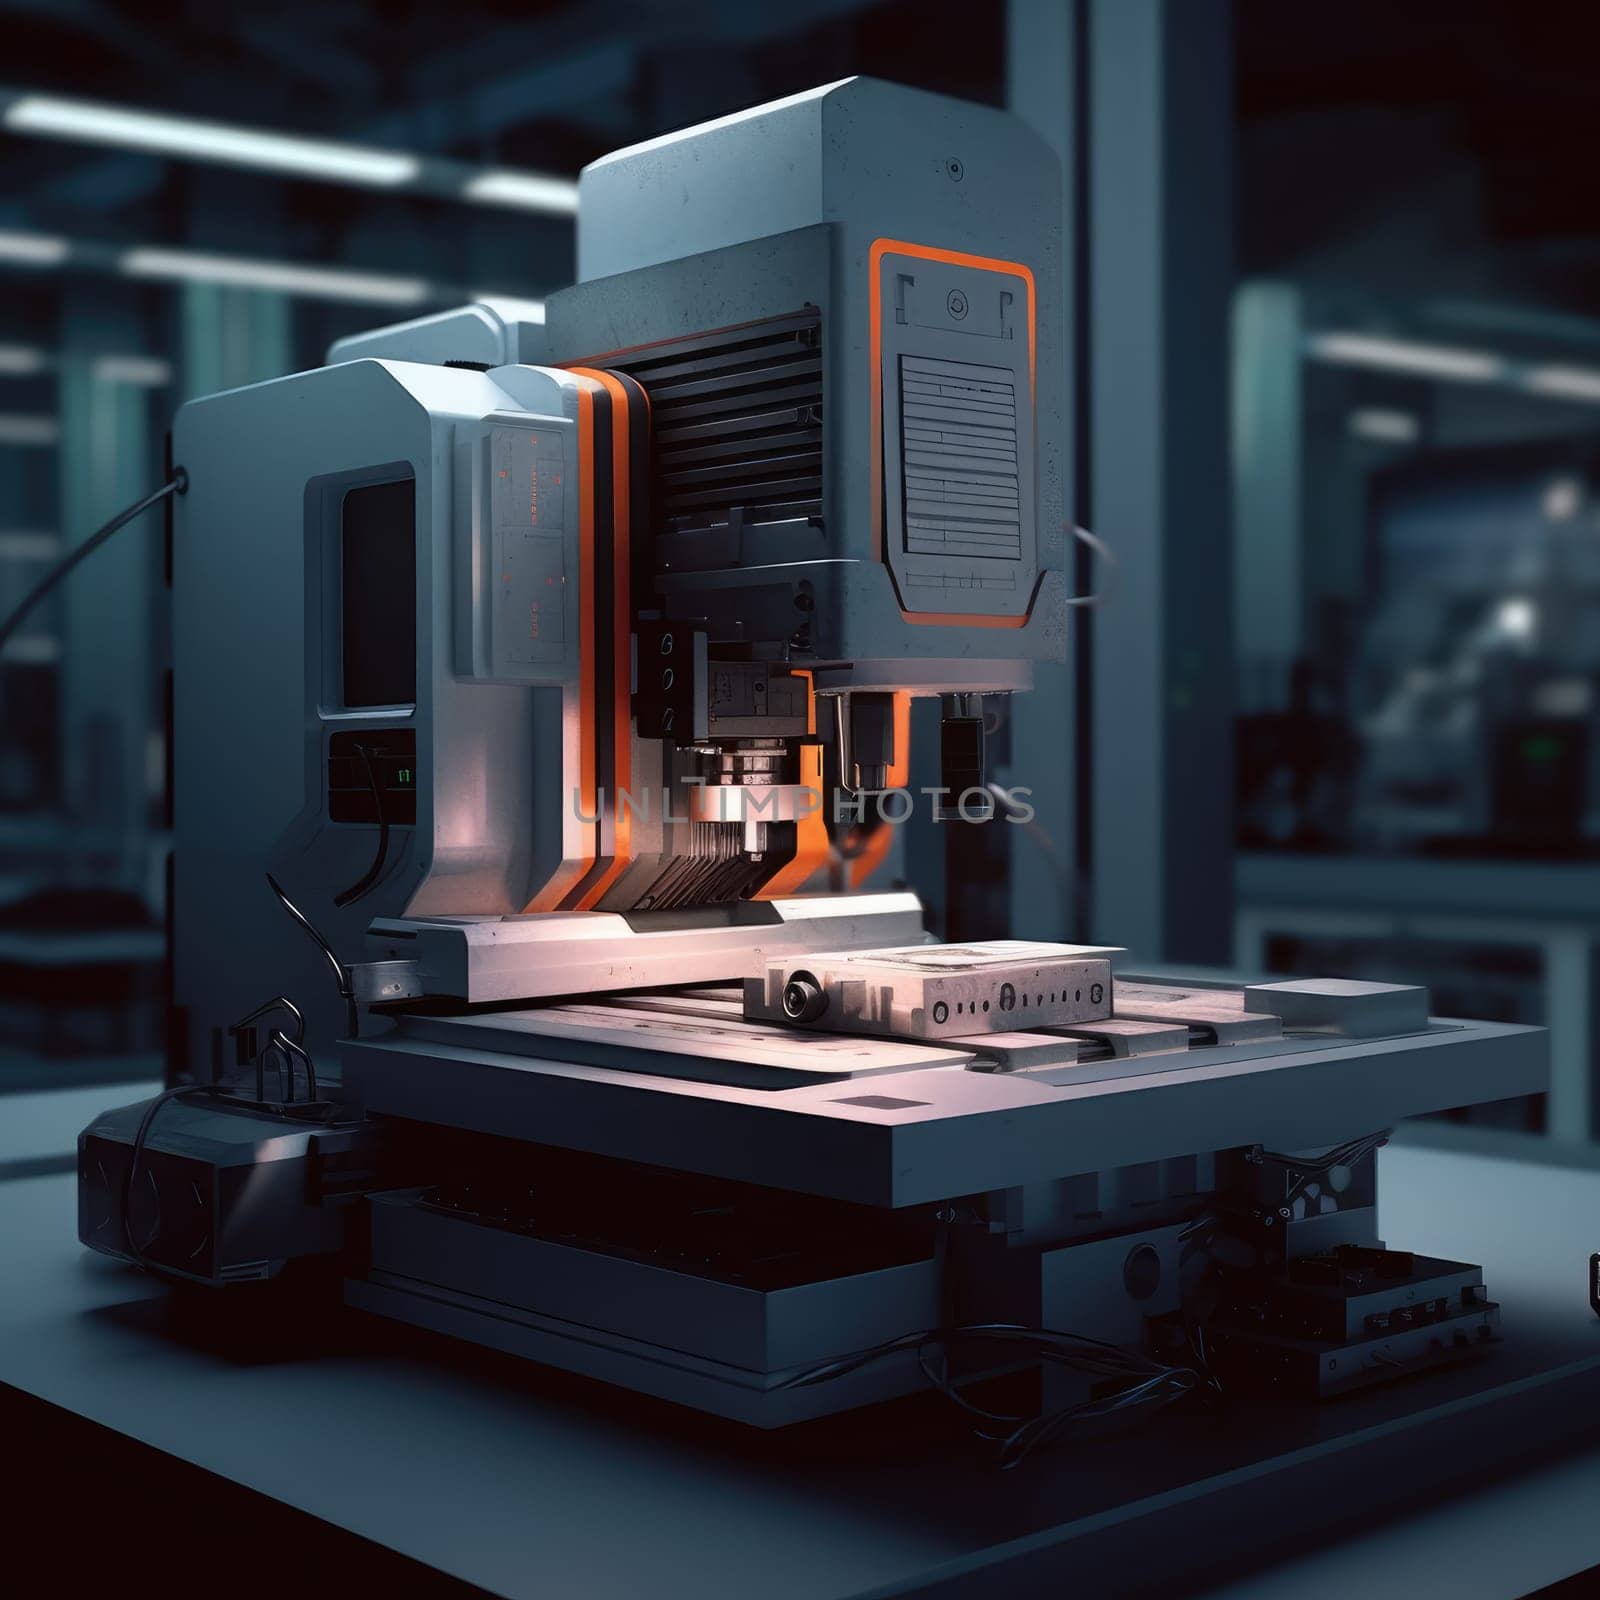 The CNC machine of the future by cherezoff